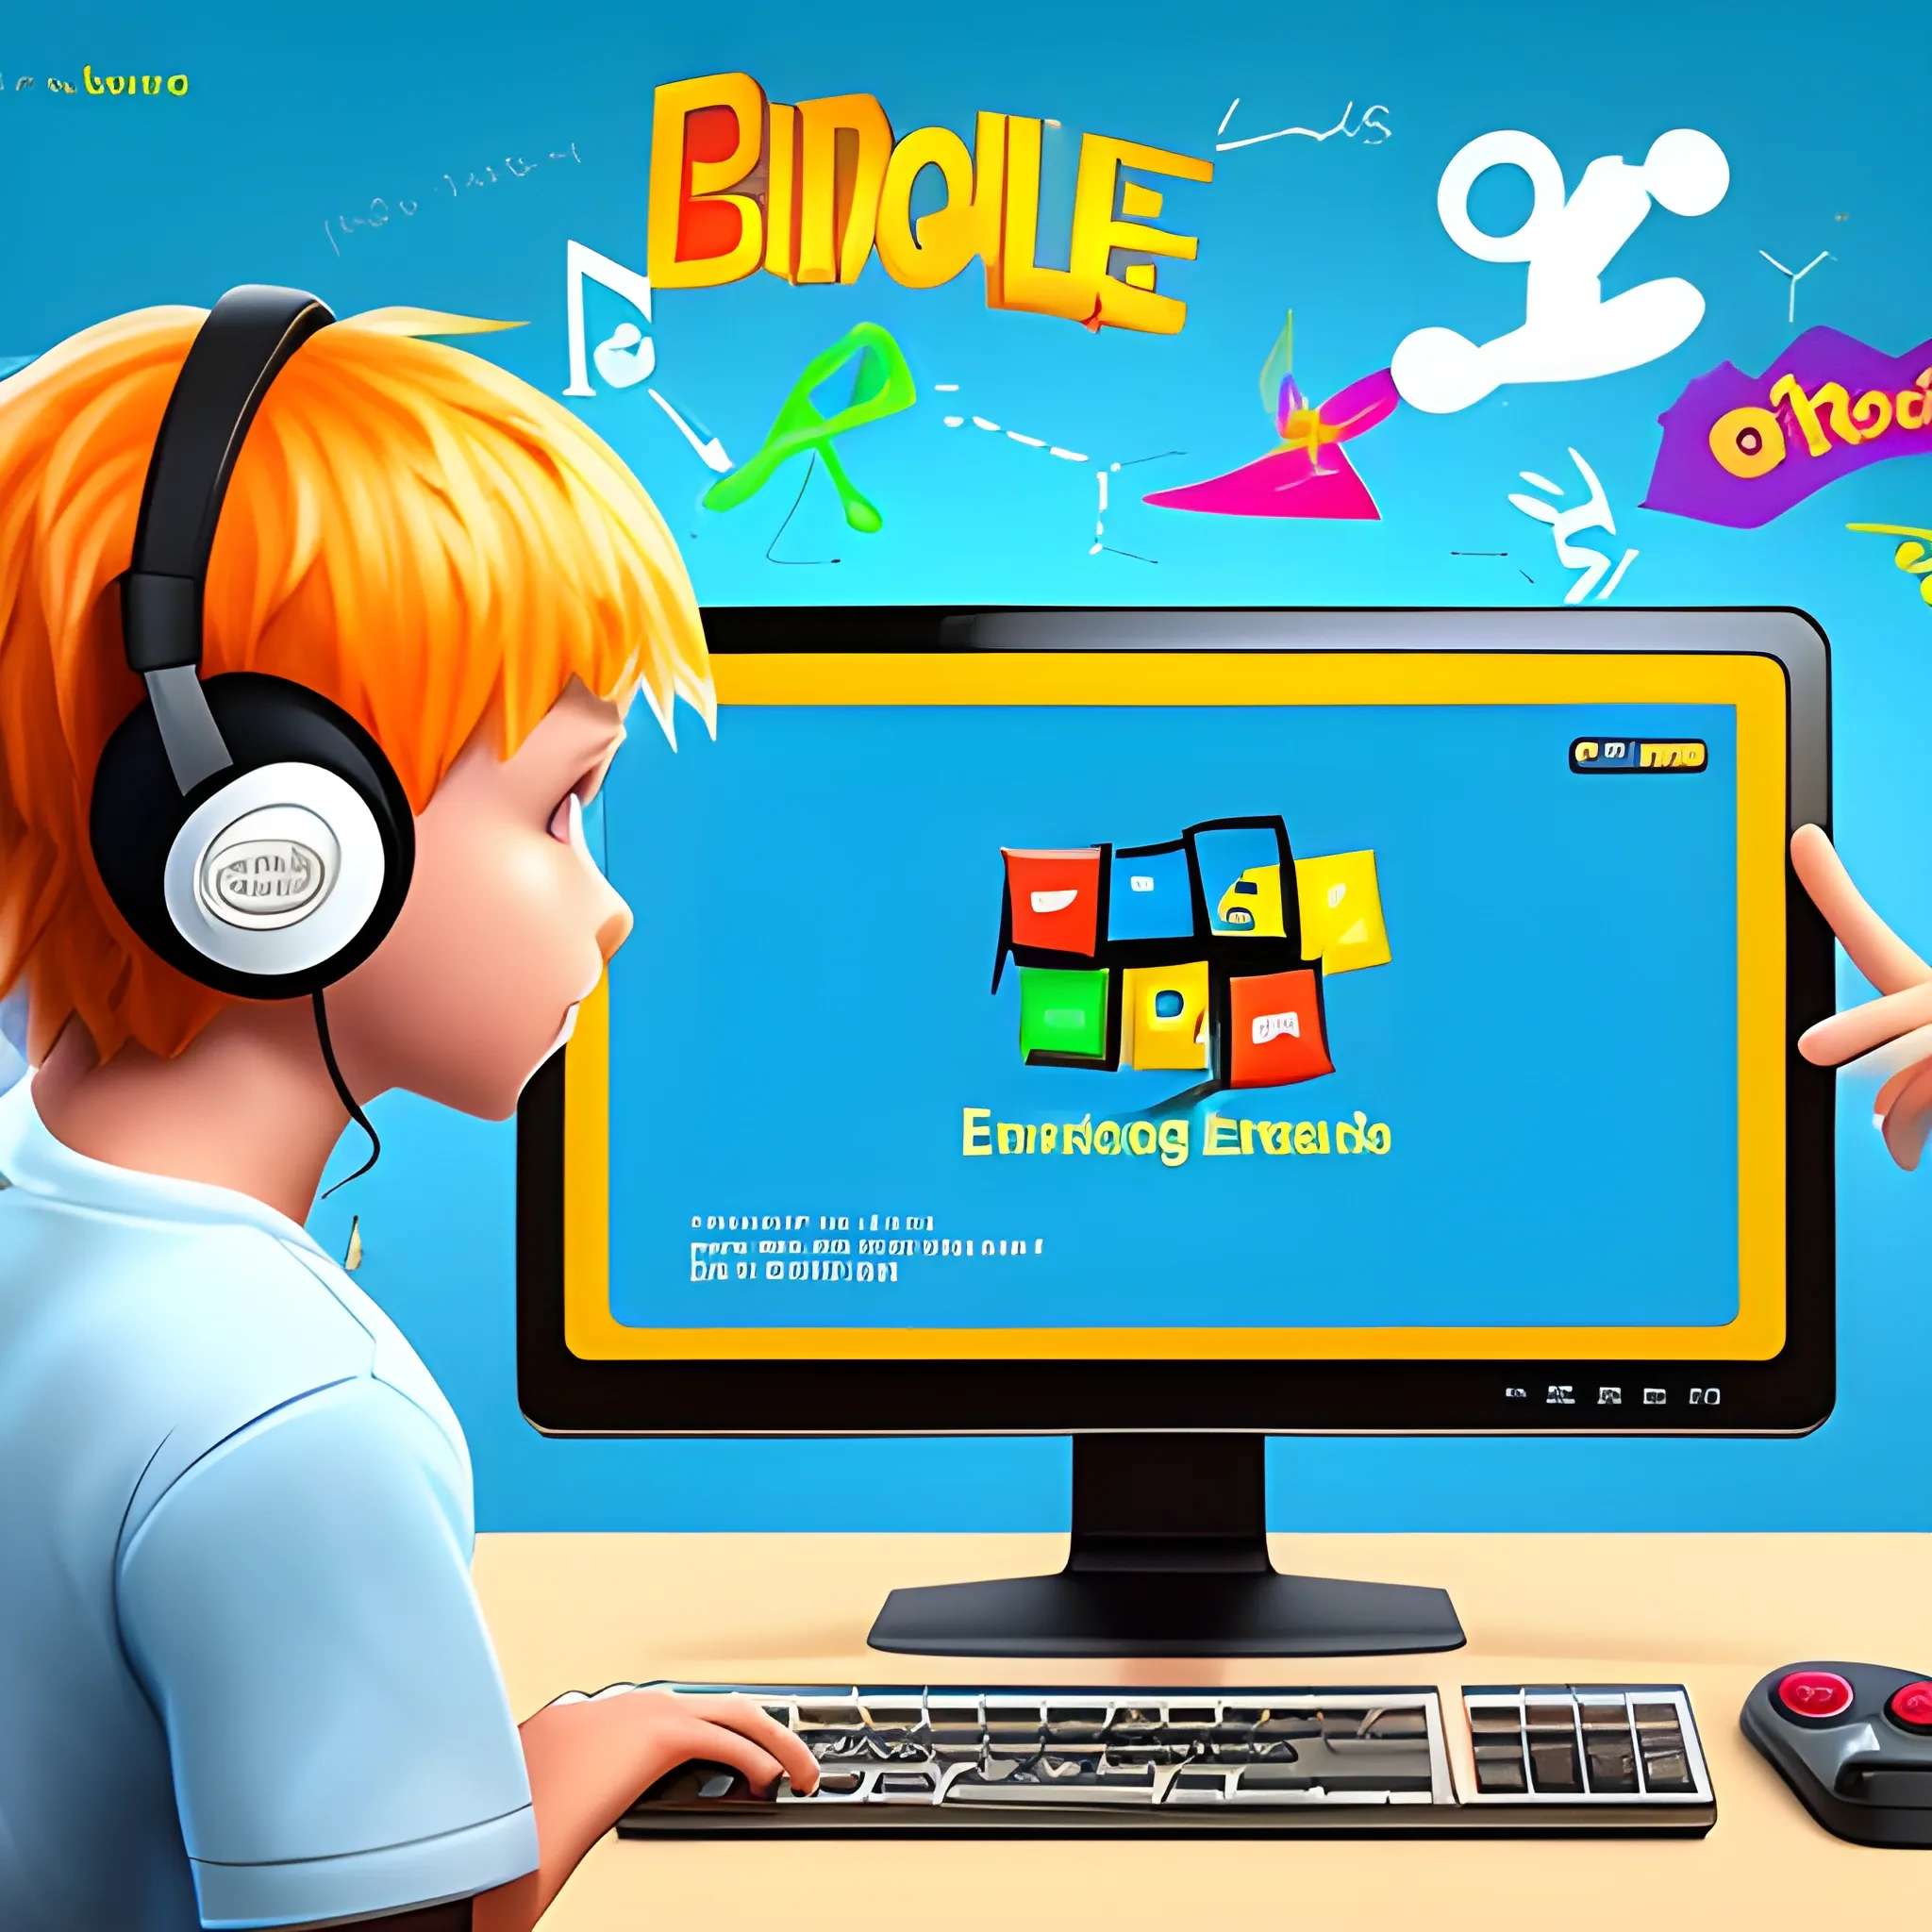 Concept image of educational browser video games, edutainment, good quality, inspiring, fun, joystick, gamepad, touchscreen, music